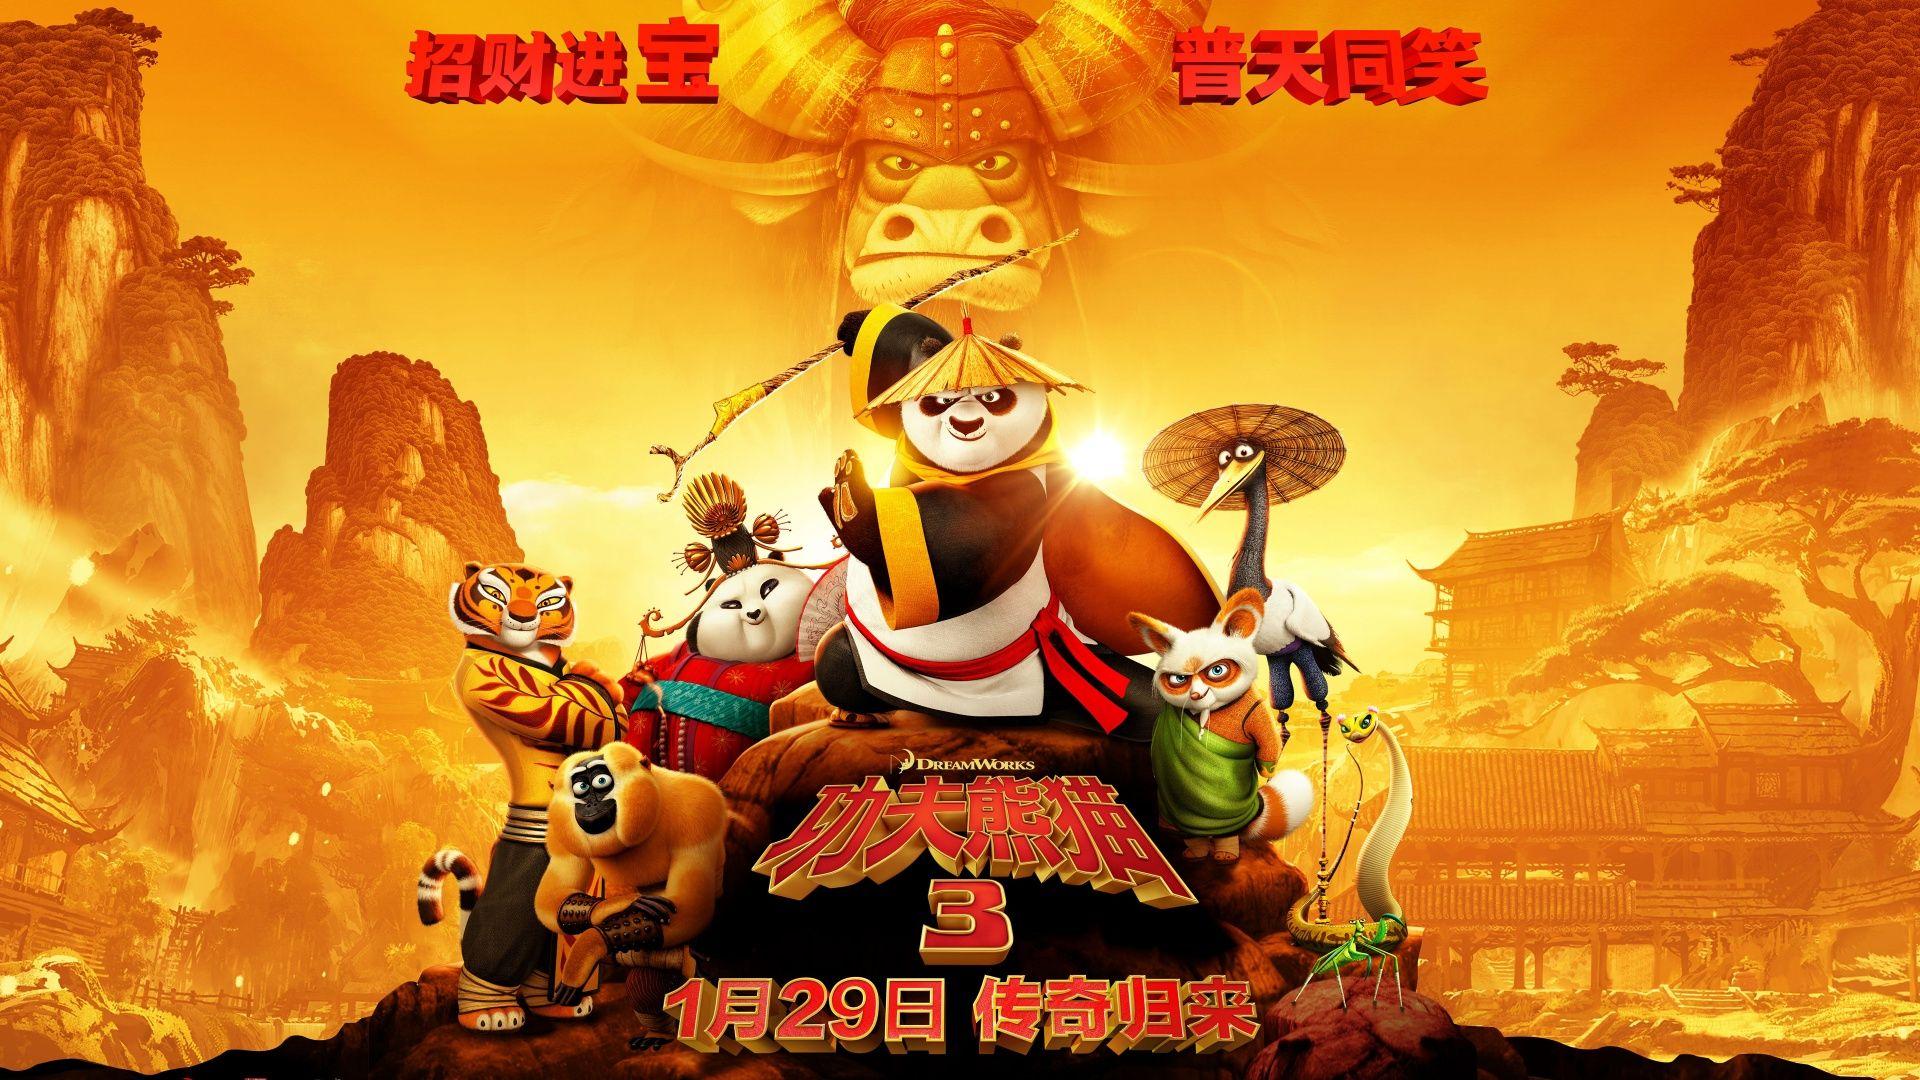 Kung Fu Panda 3 Chinese Wallpaper in jpg format for free download